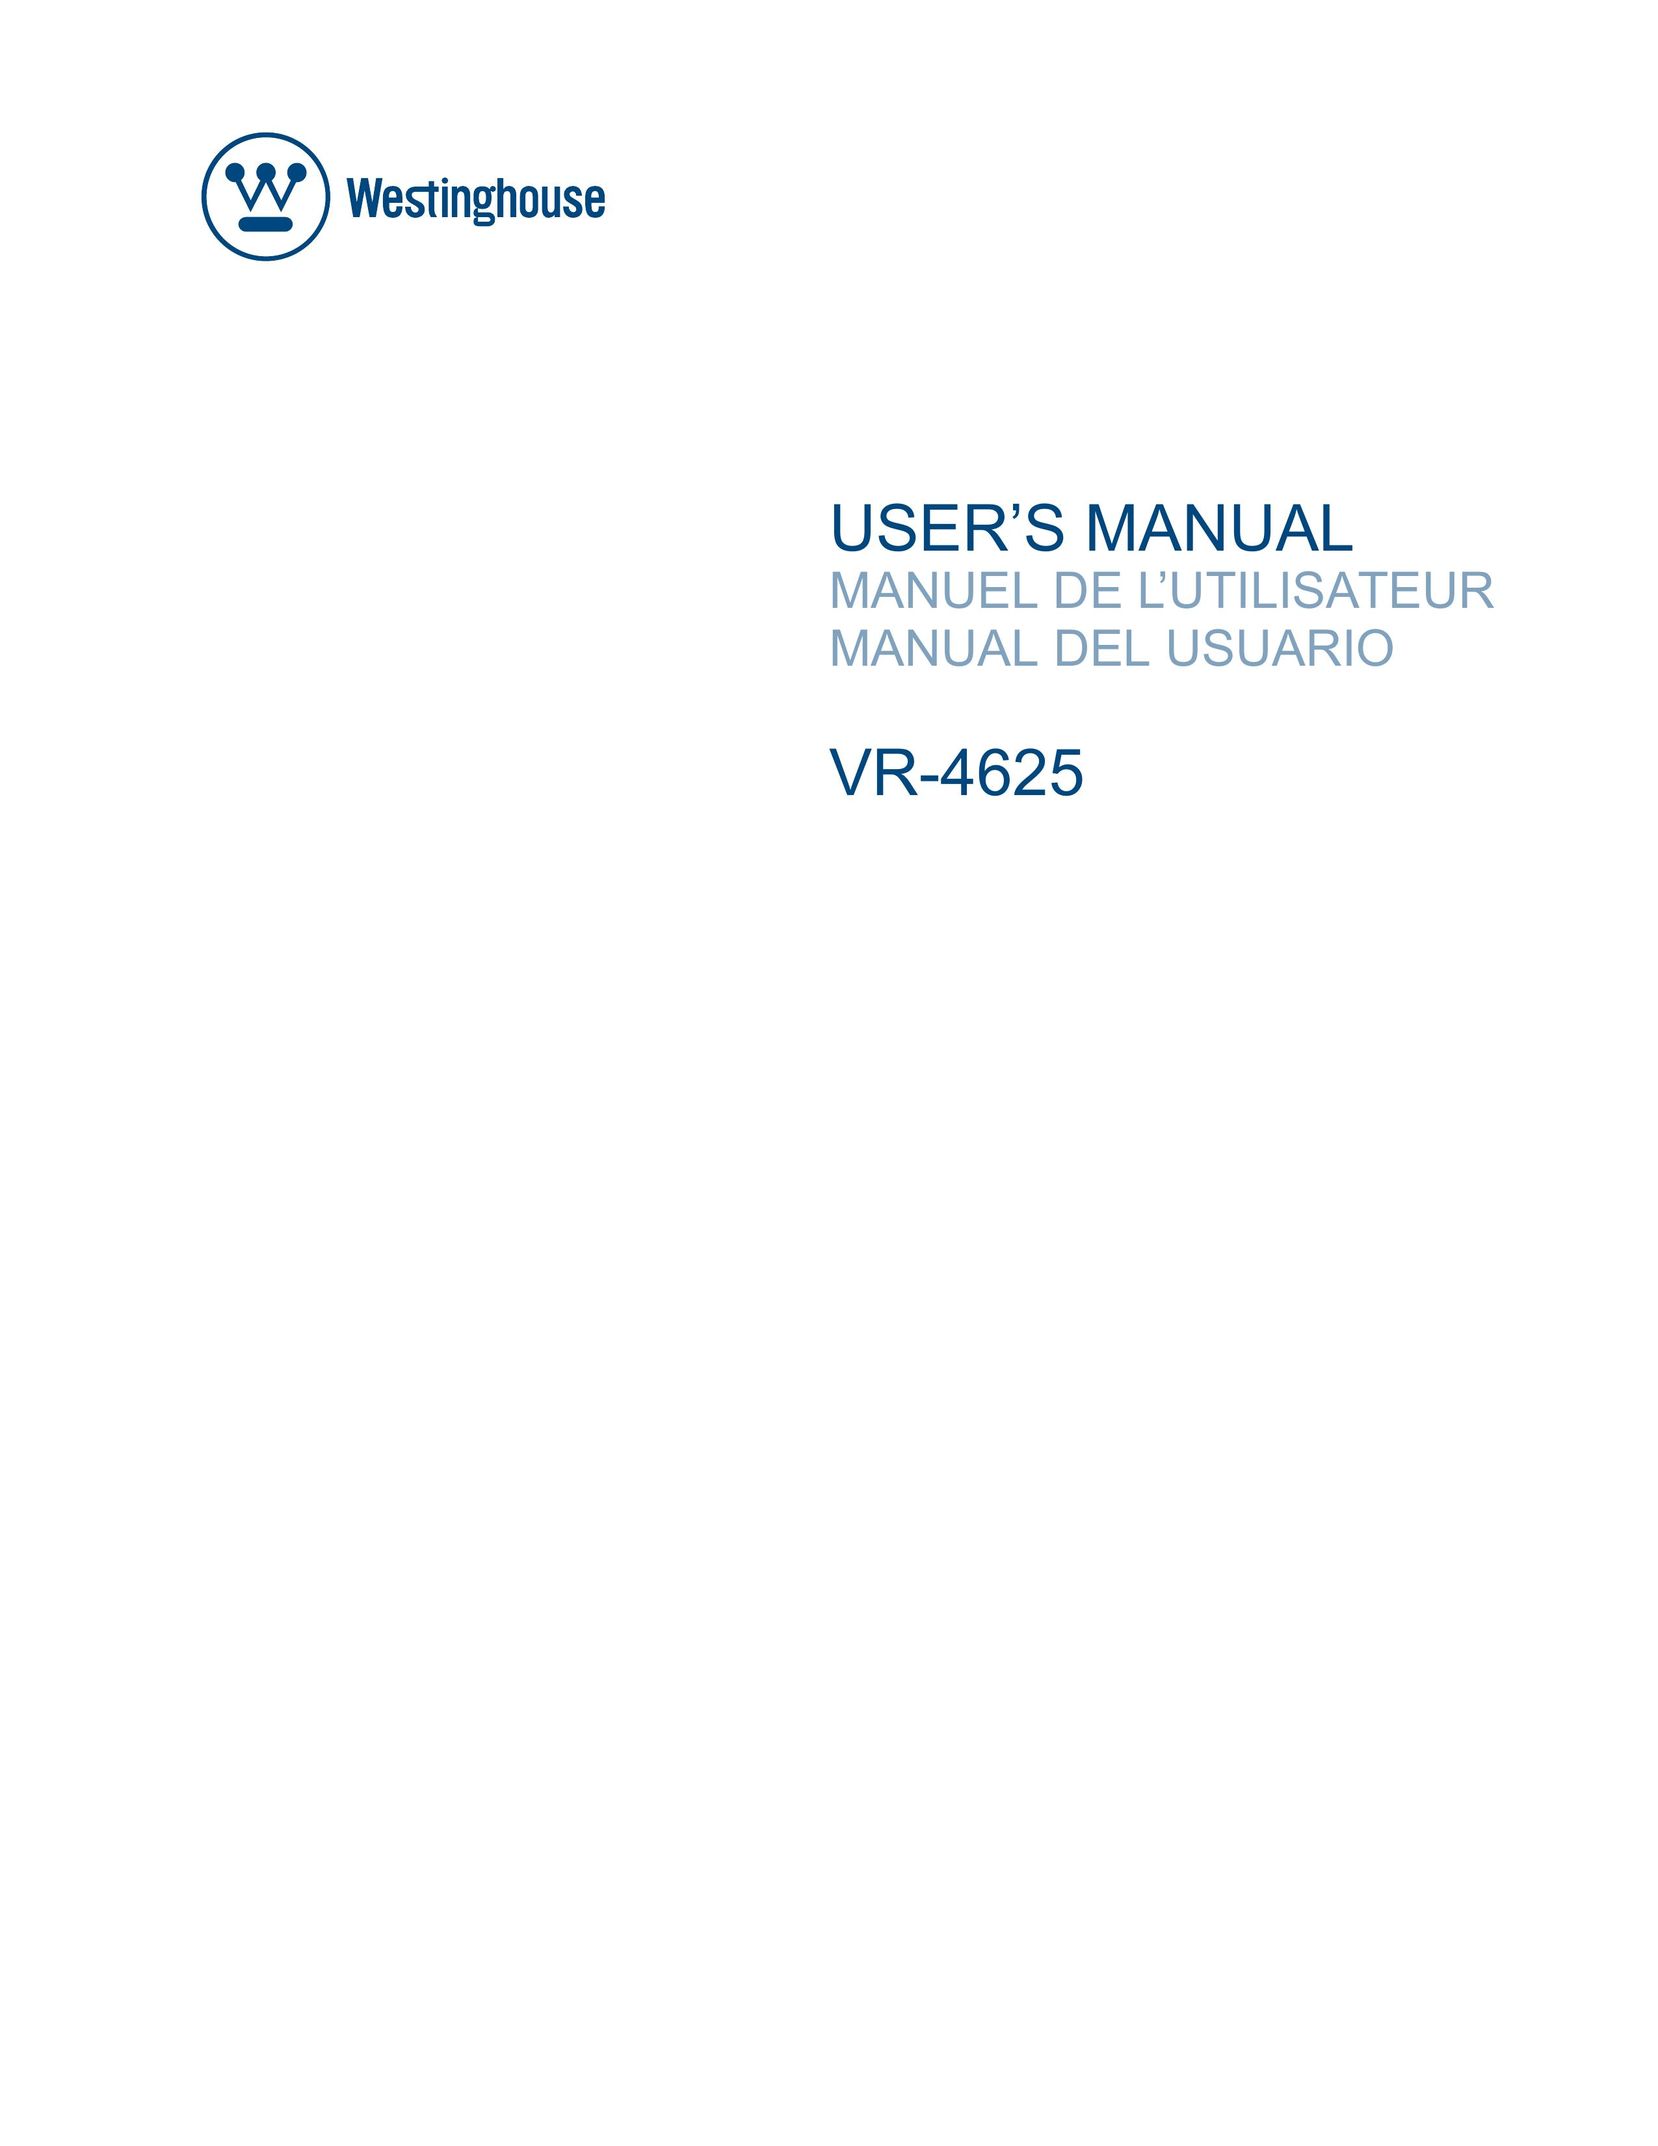 Westinghouse VR-4625 Car Satellite TV System User Manual